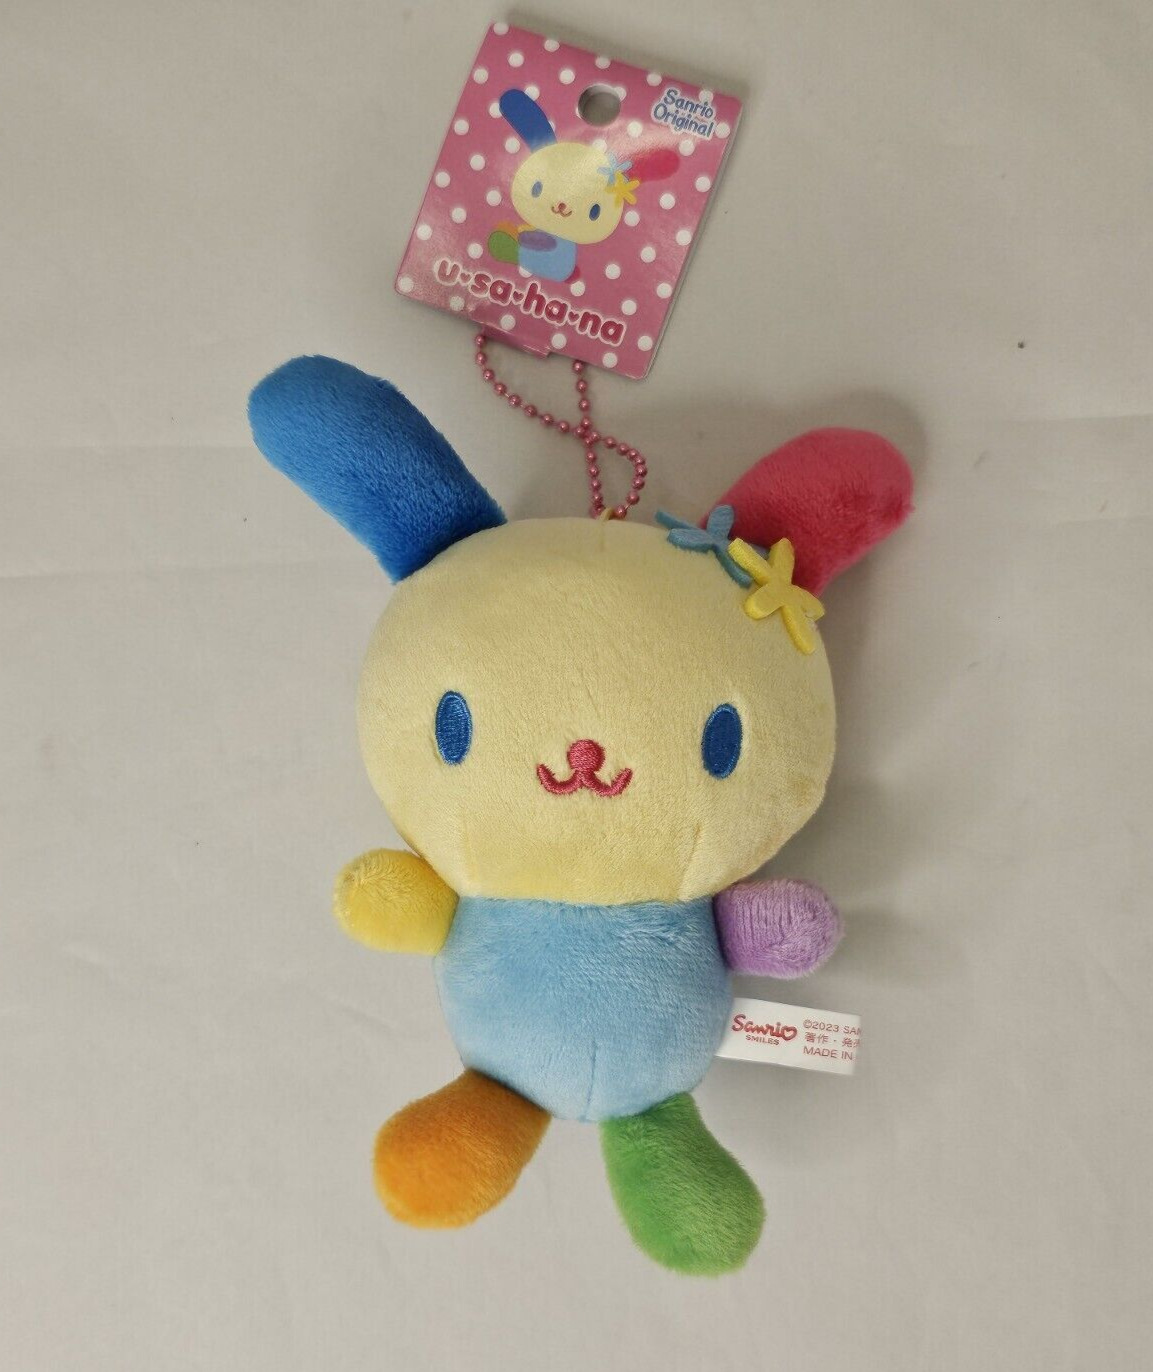 Sanrio Usahana U*sa*ha*na bunny Plush beaded keychain Japan